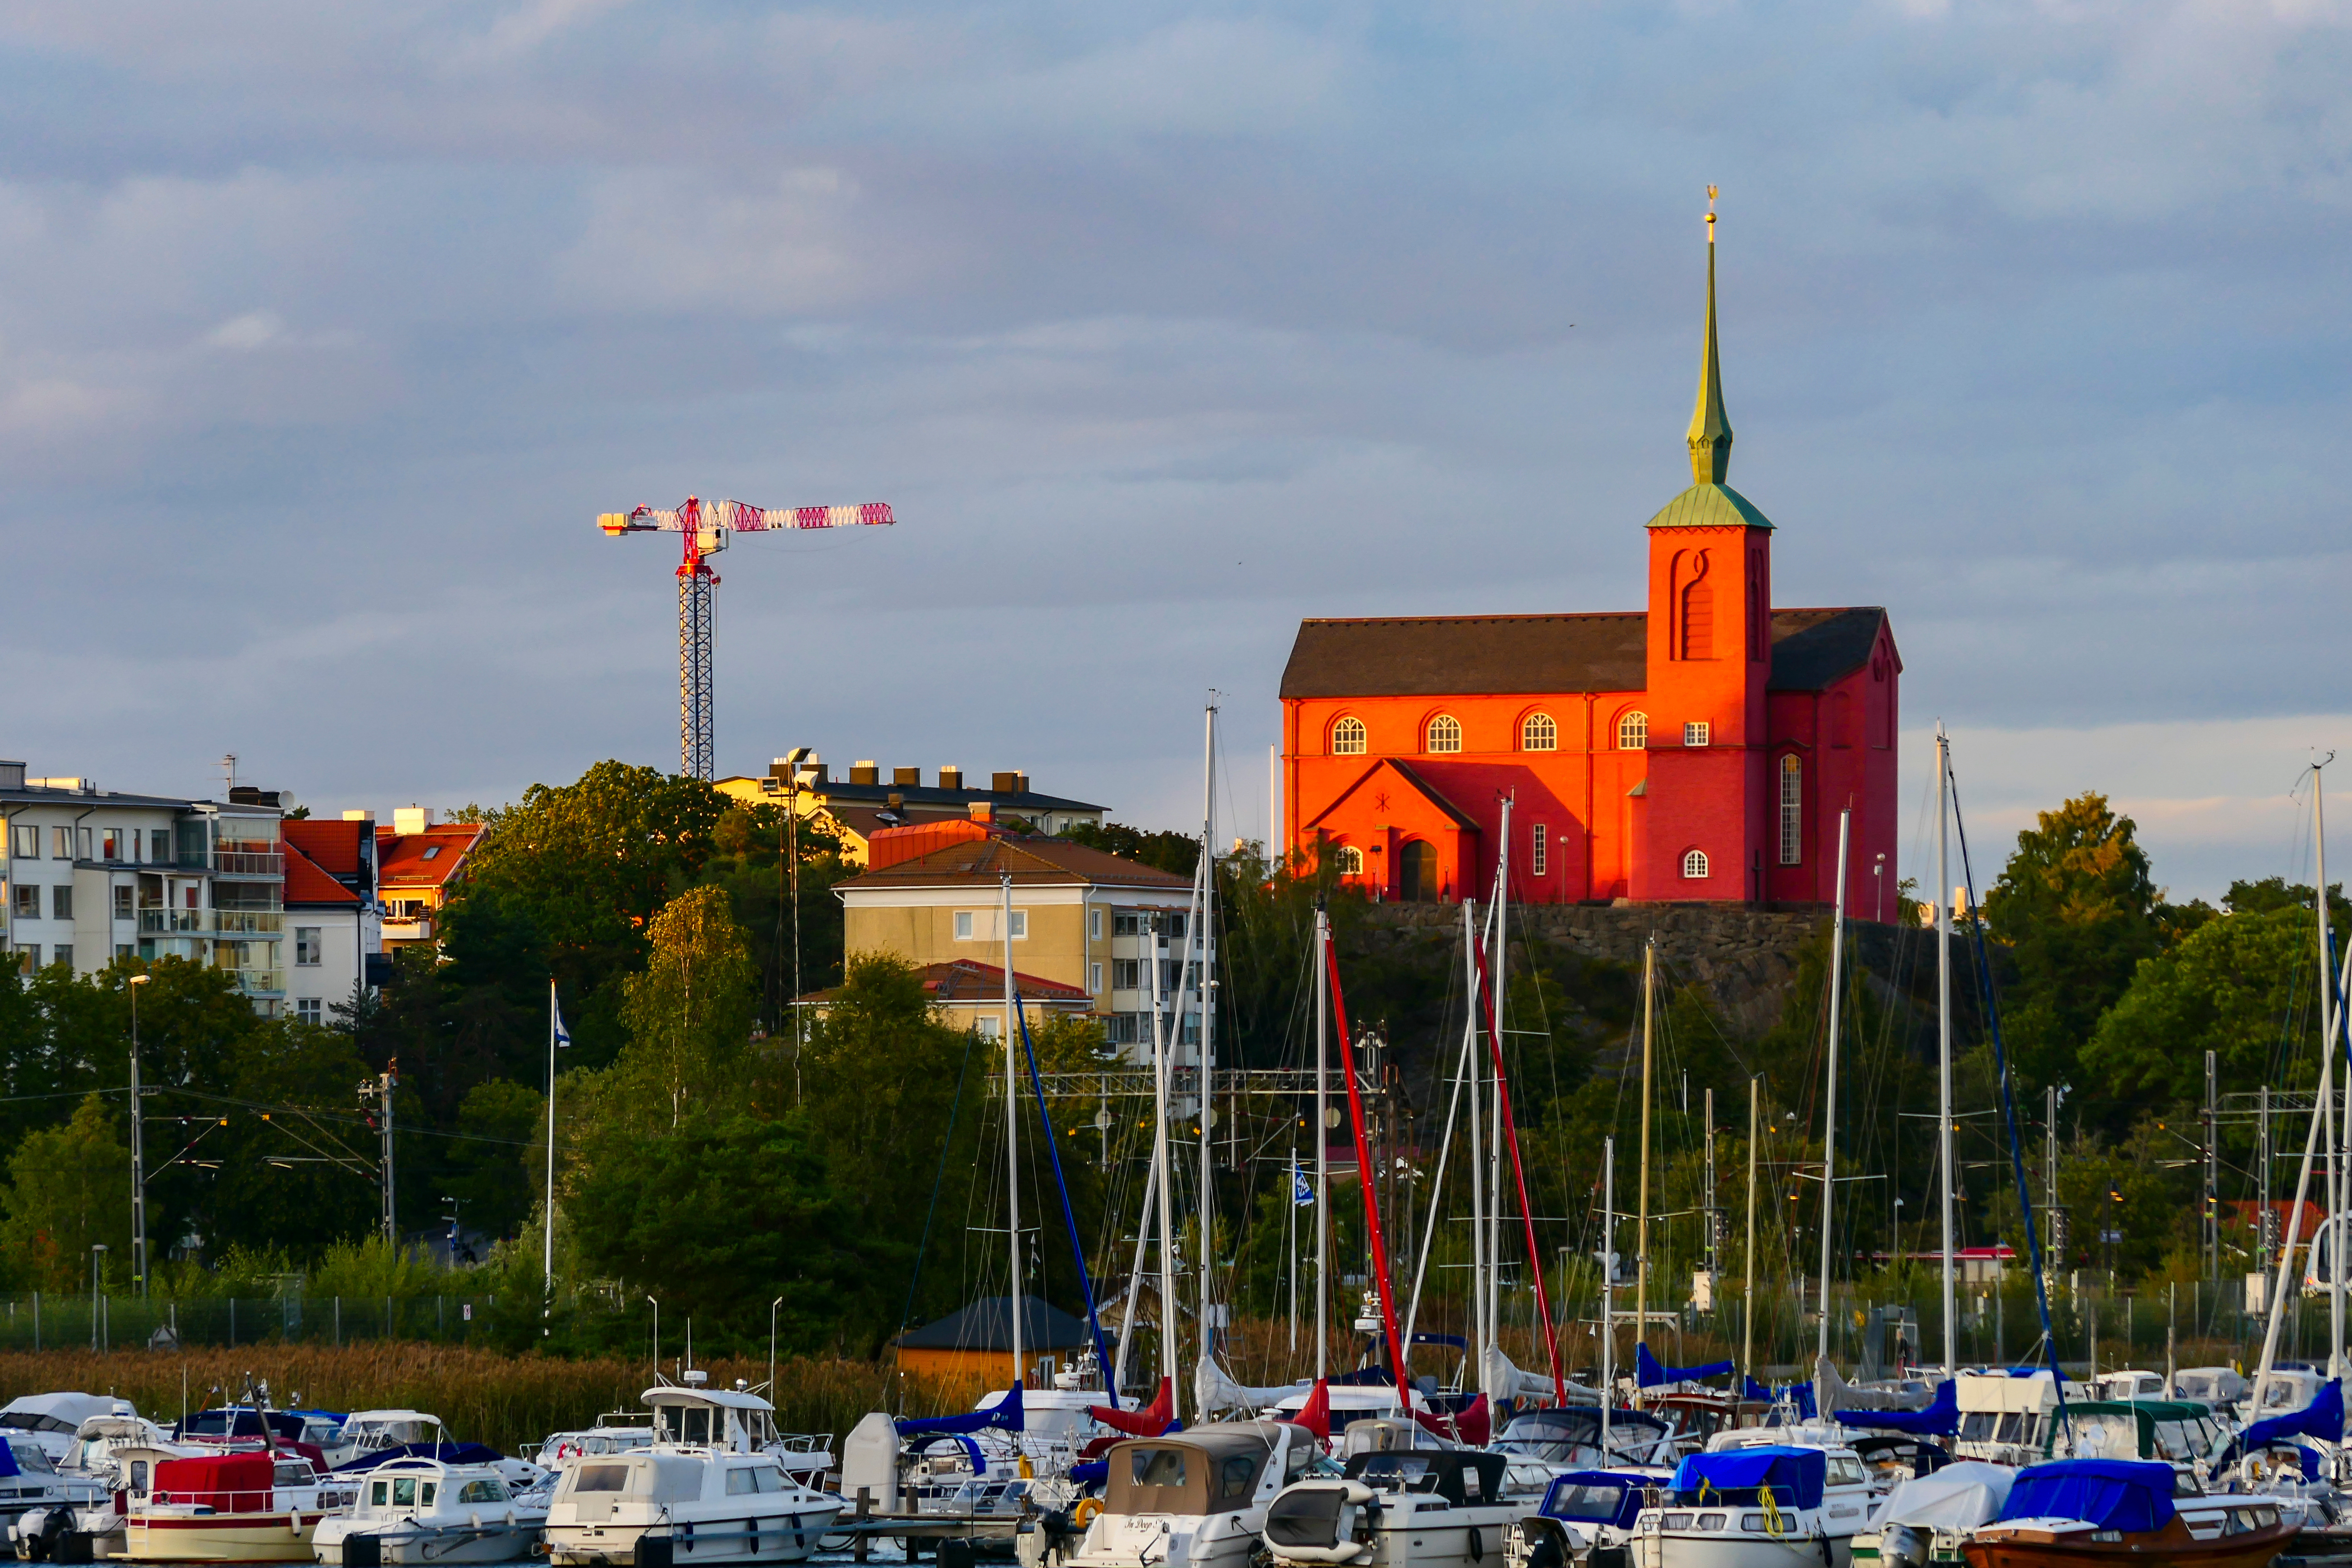 Nynashamn, Sweden The Nynashamn Church and harbor.